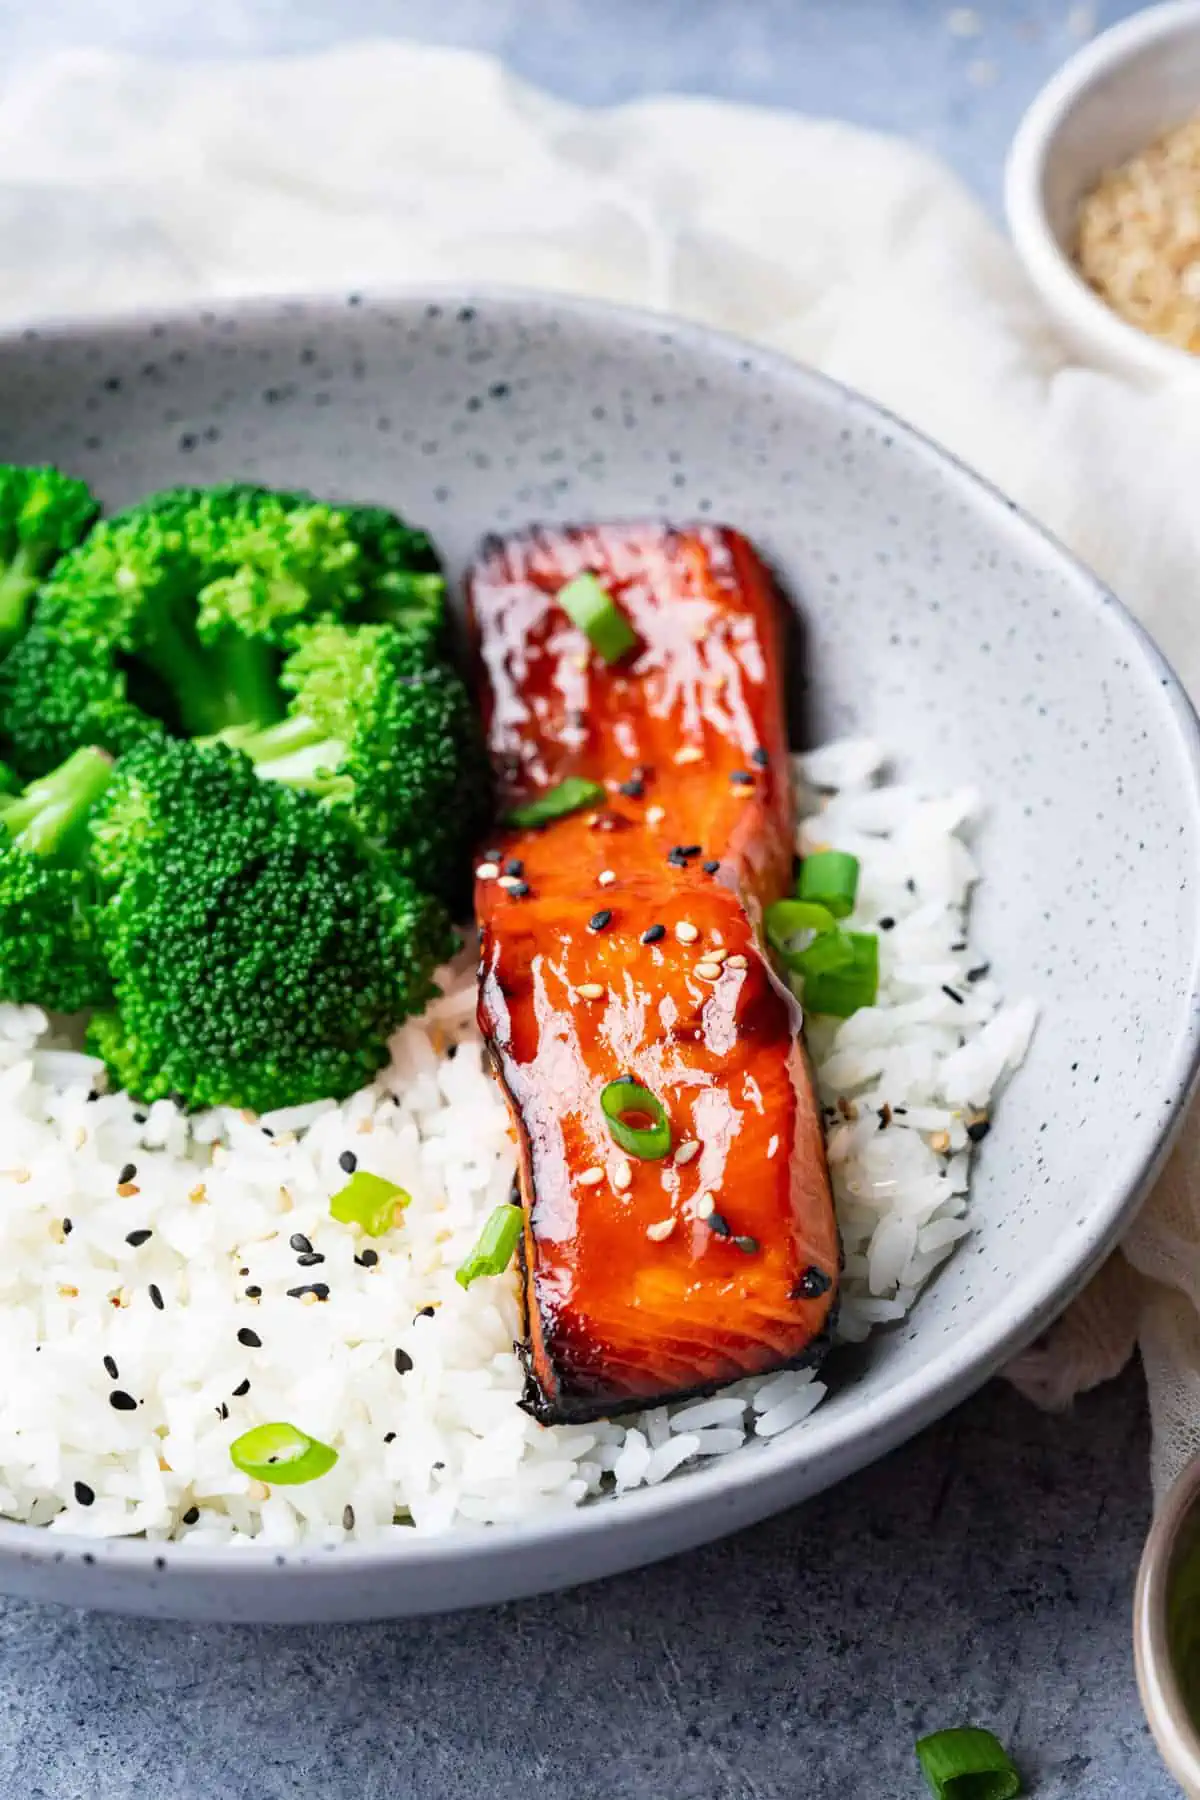 Teriyaki salmon serve with rice, and broccoli and garnished with sesame seeds and green onion.